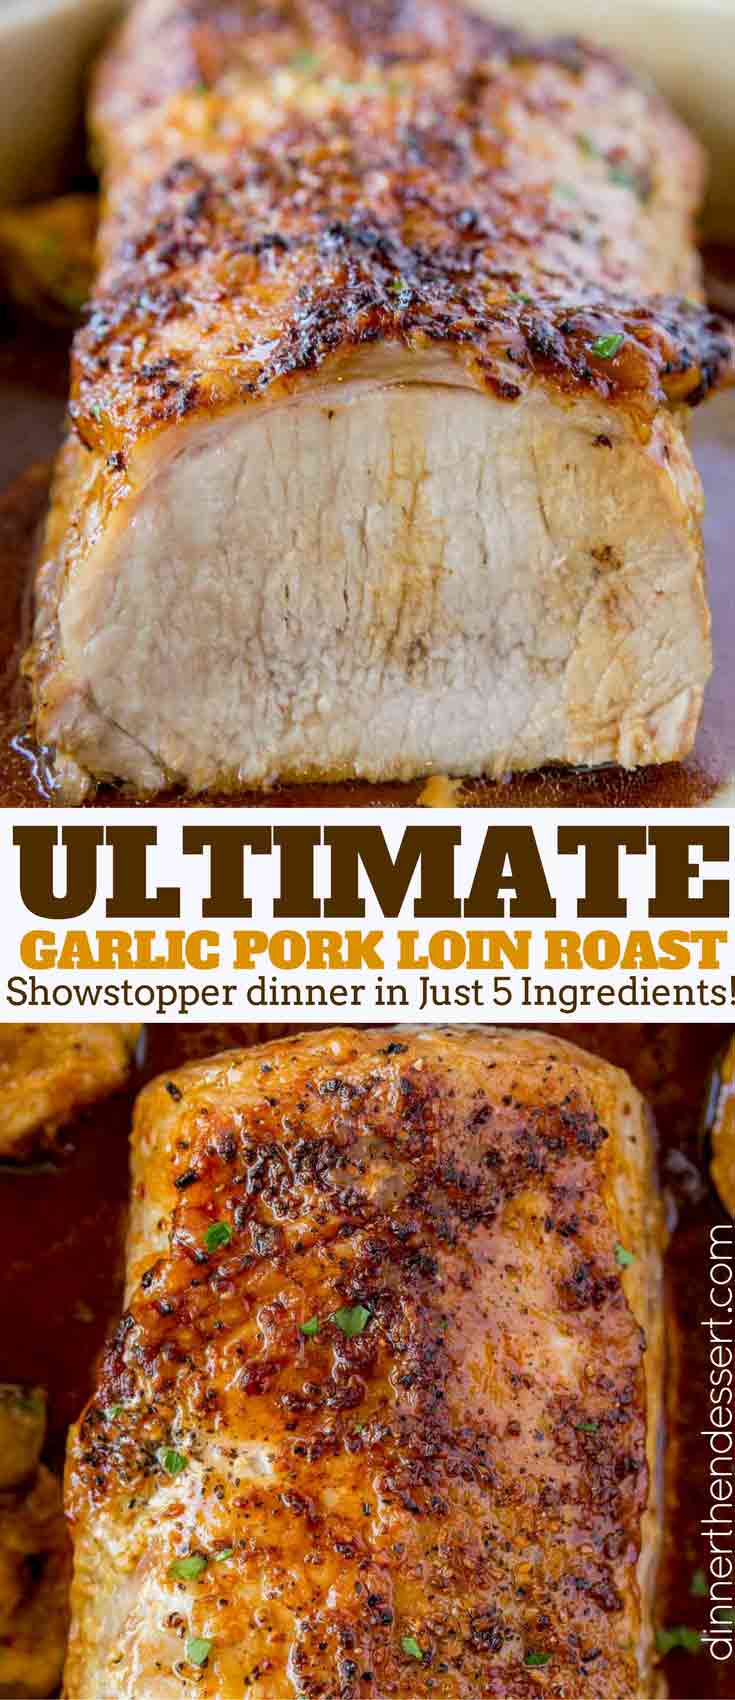 Ultimate Garlic Pork Loin Roast Dinner Then Dessert,Domesticated Red Fox Pets